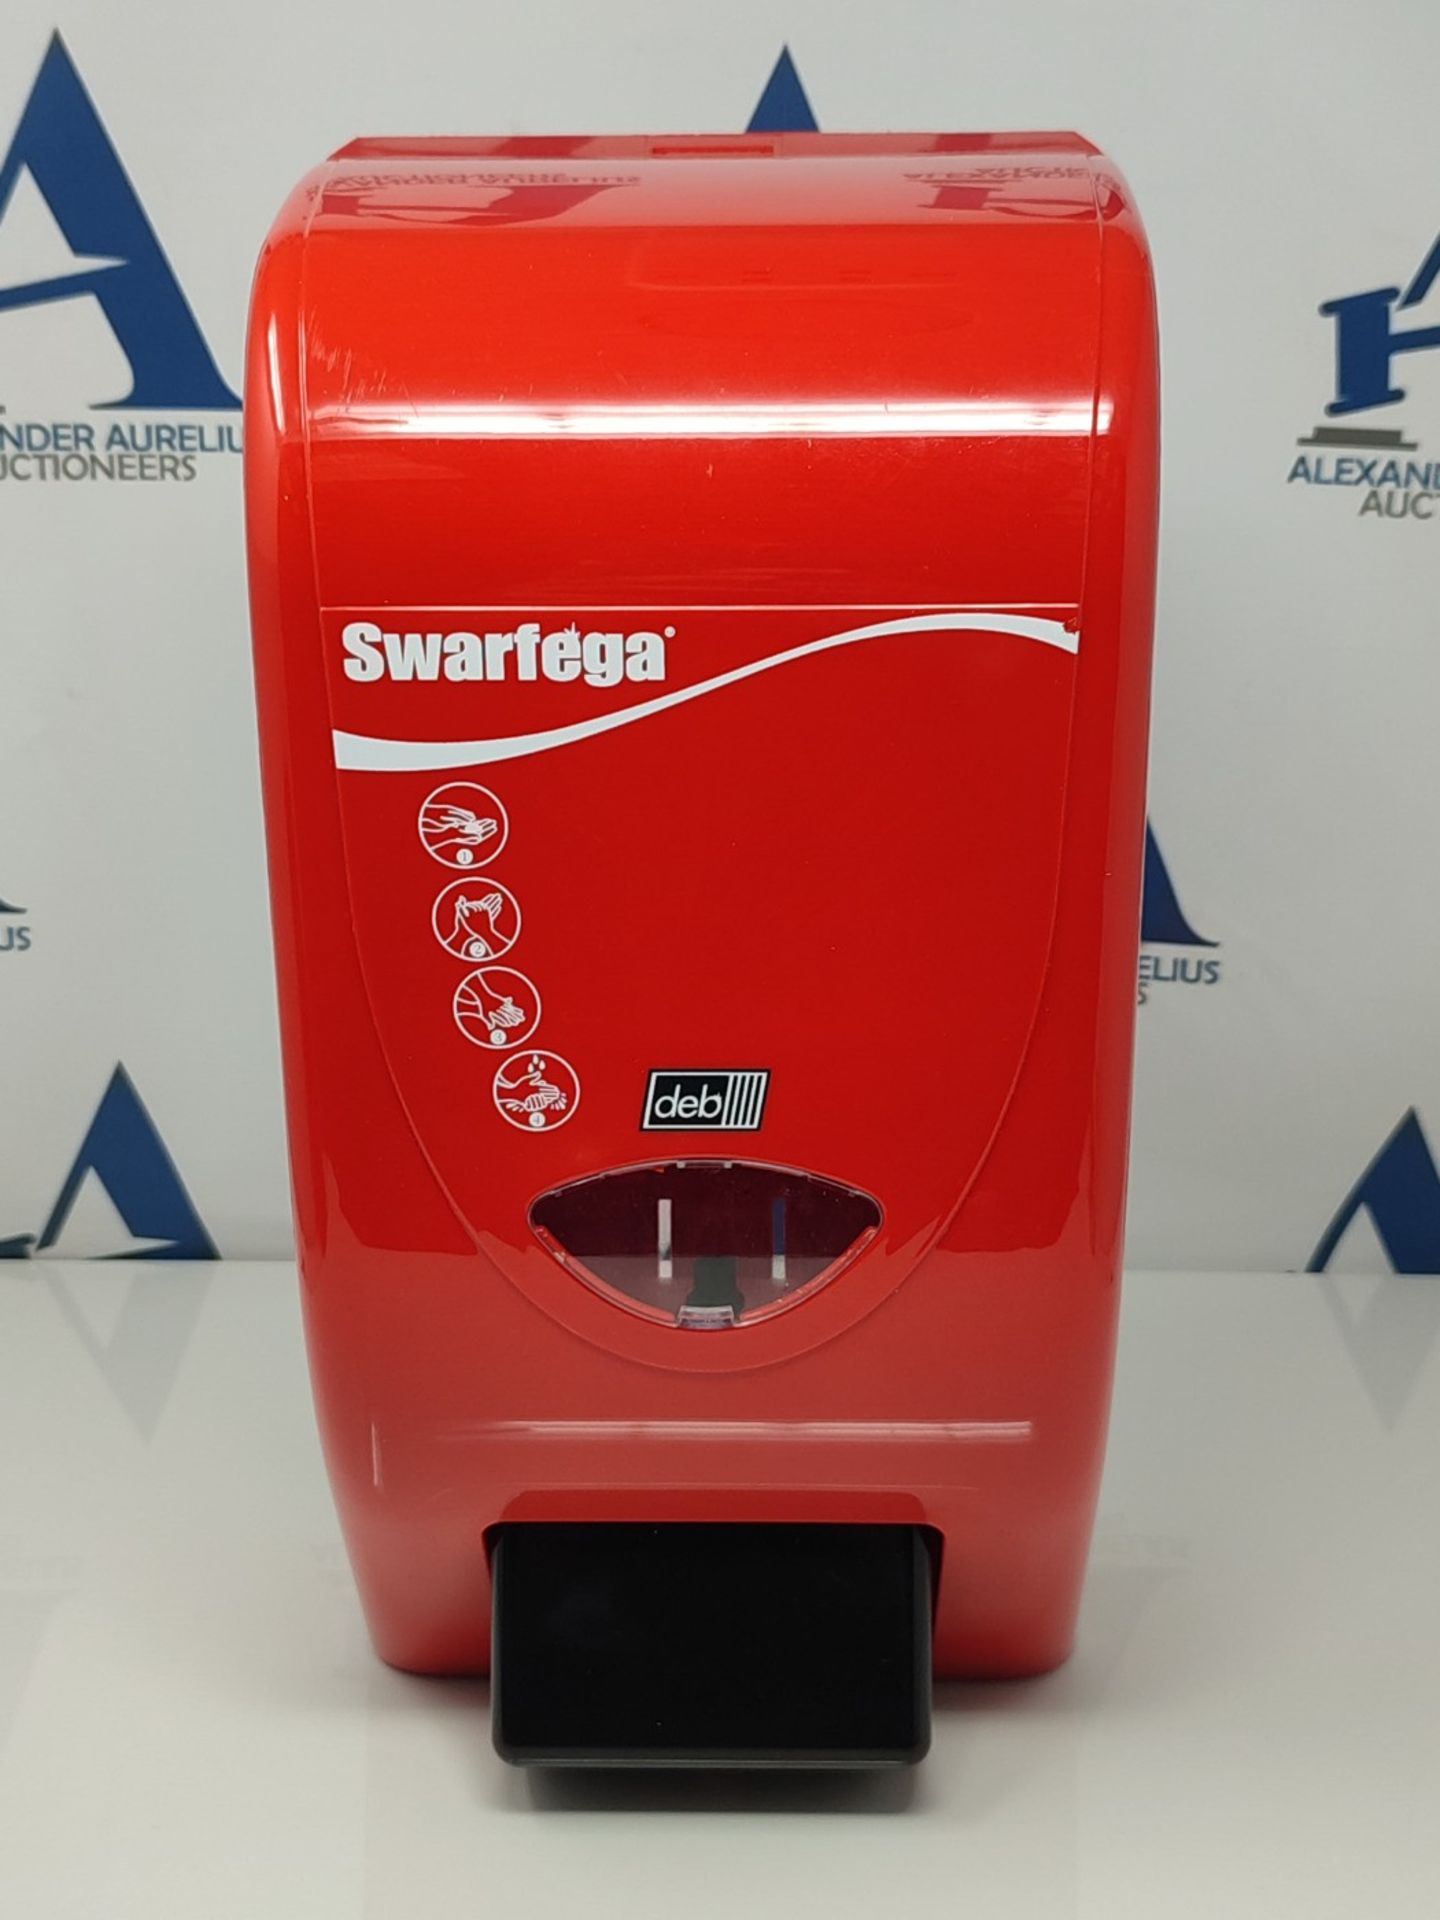 Swarfega Hand Wash Dispenser 4L, Hand Soap Dispenser for use with 4 Litre Swarfega Han - Image 2 of 3